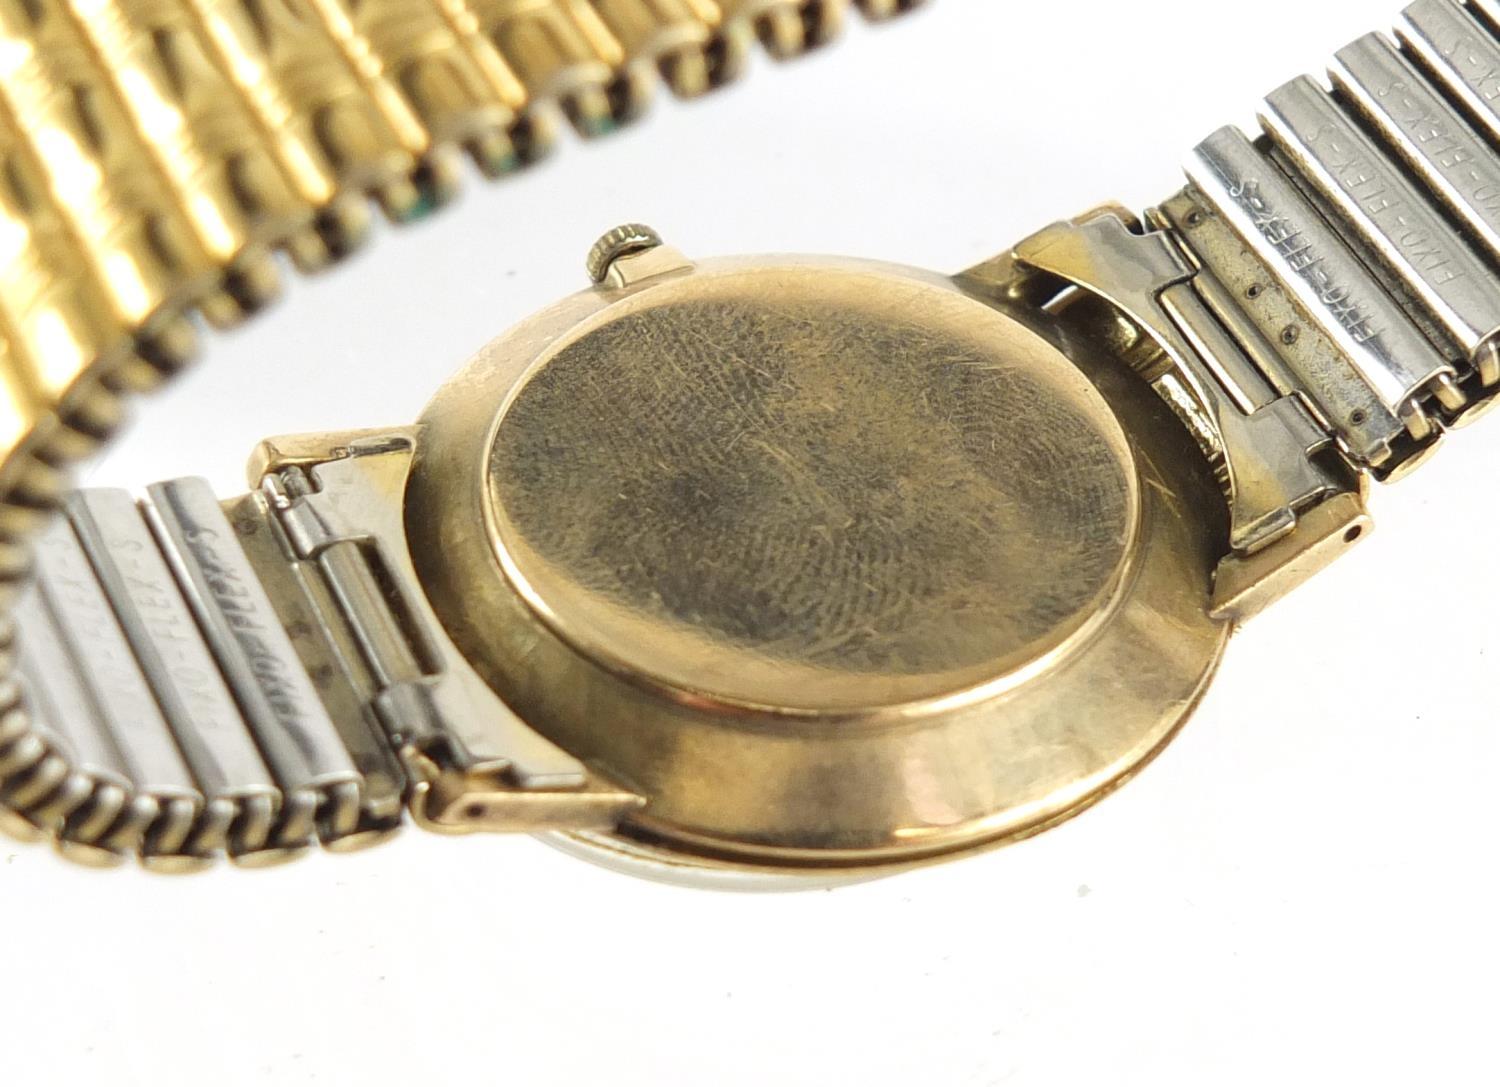 Rotary, gentlemen's 9ct manual wristwatch, 34mm in diameter - Image 4 of 5